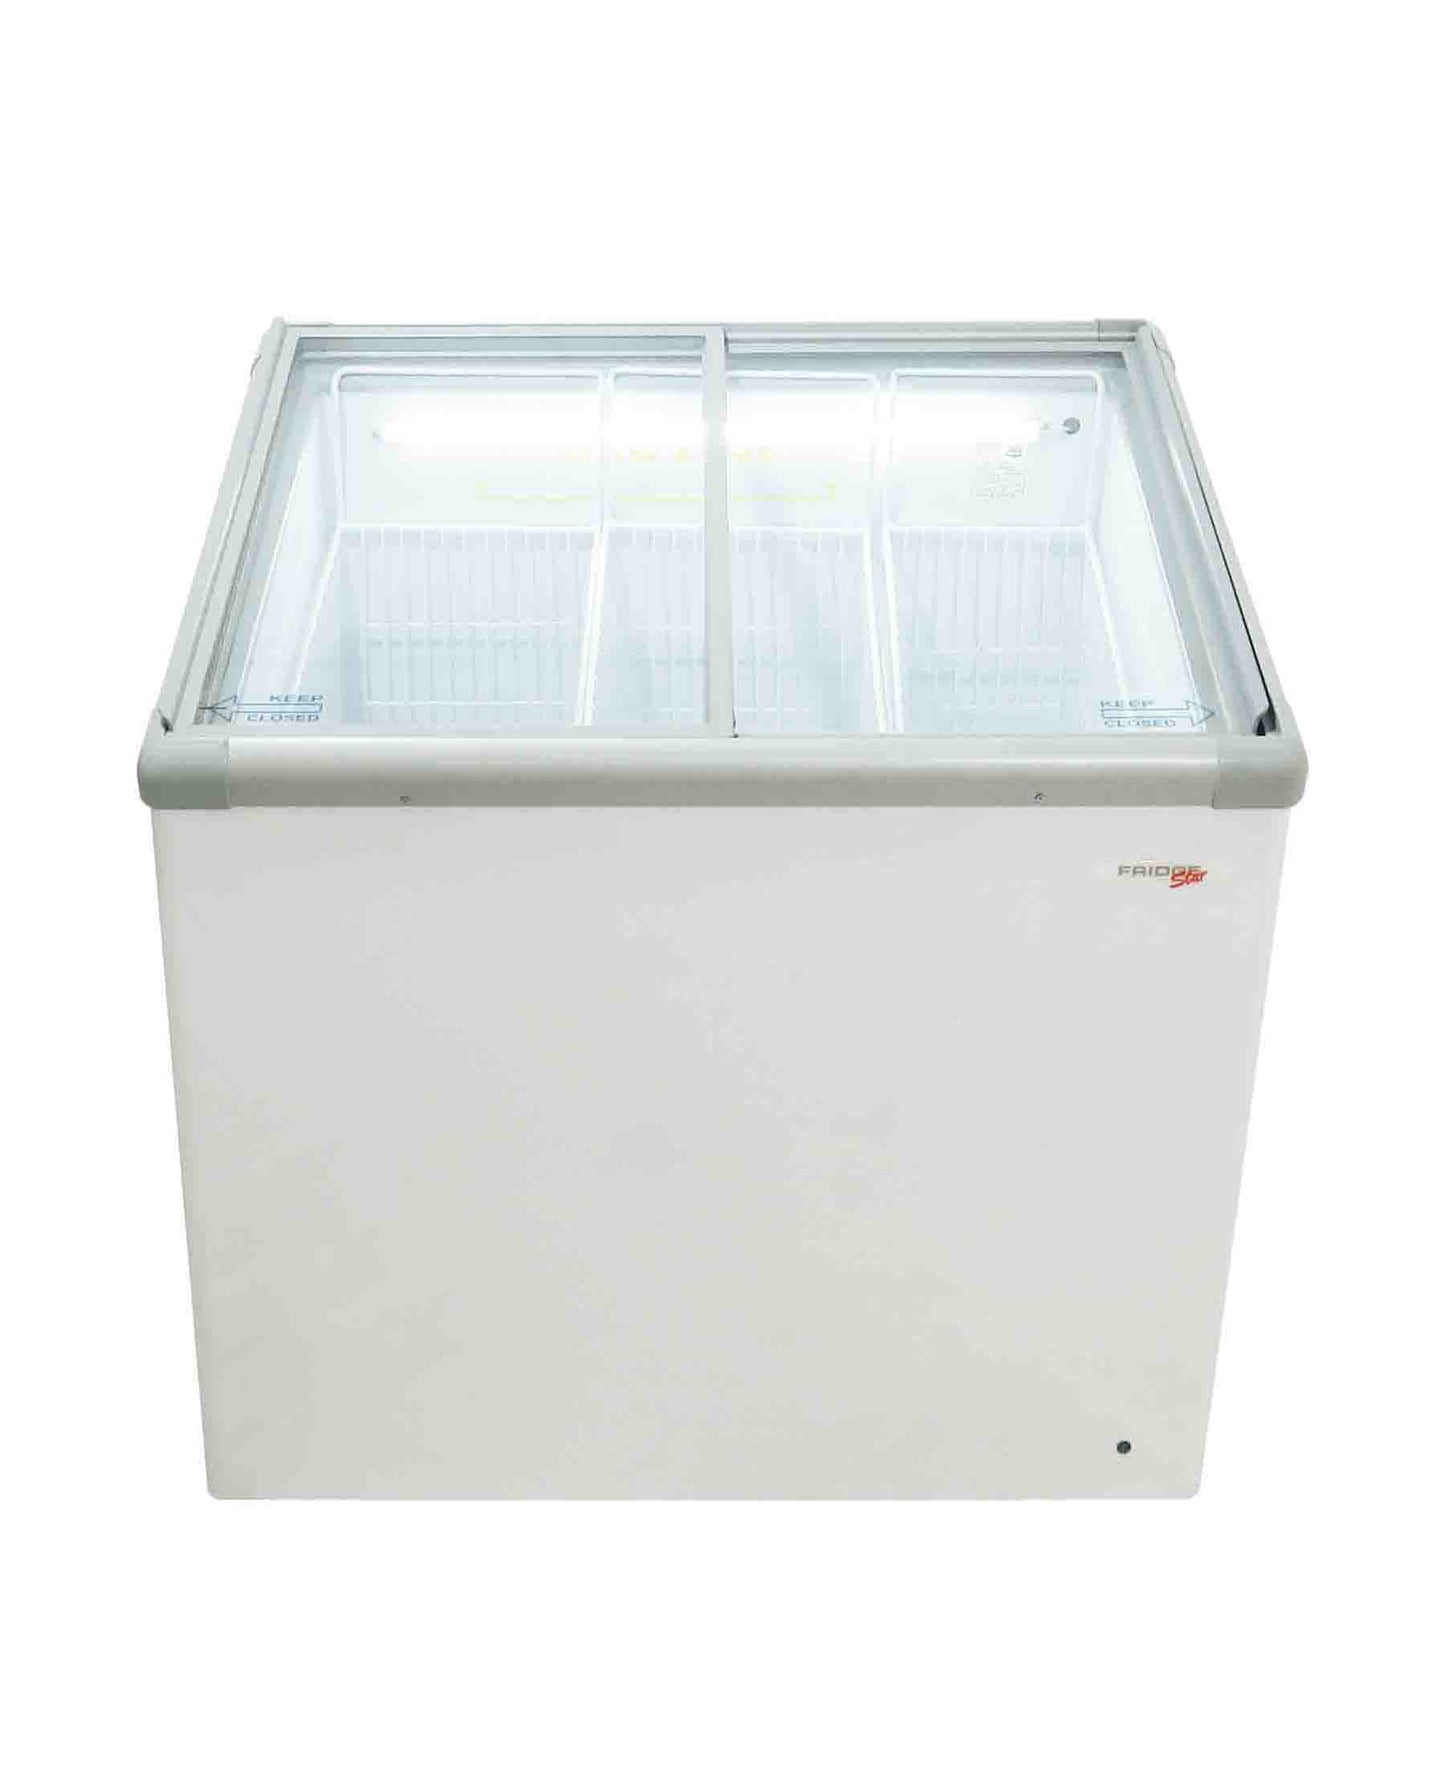 Fridge Star Ice Cream Freezer 200LT CF310VI - White